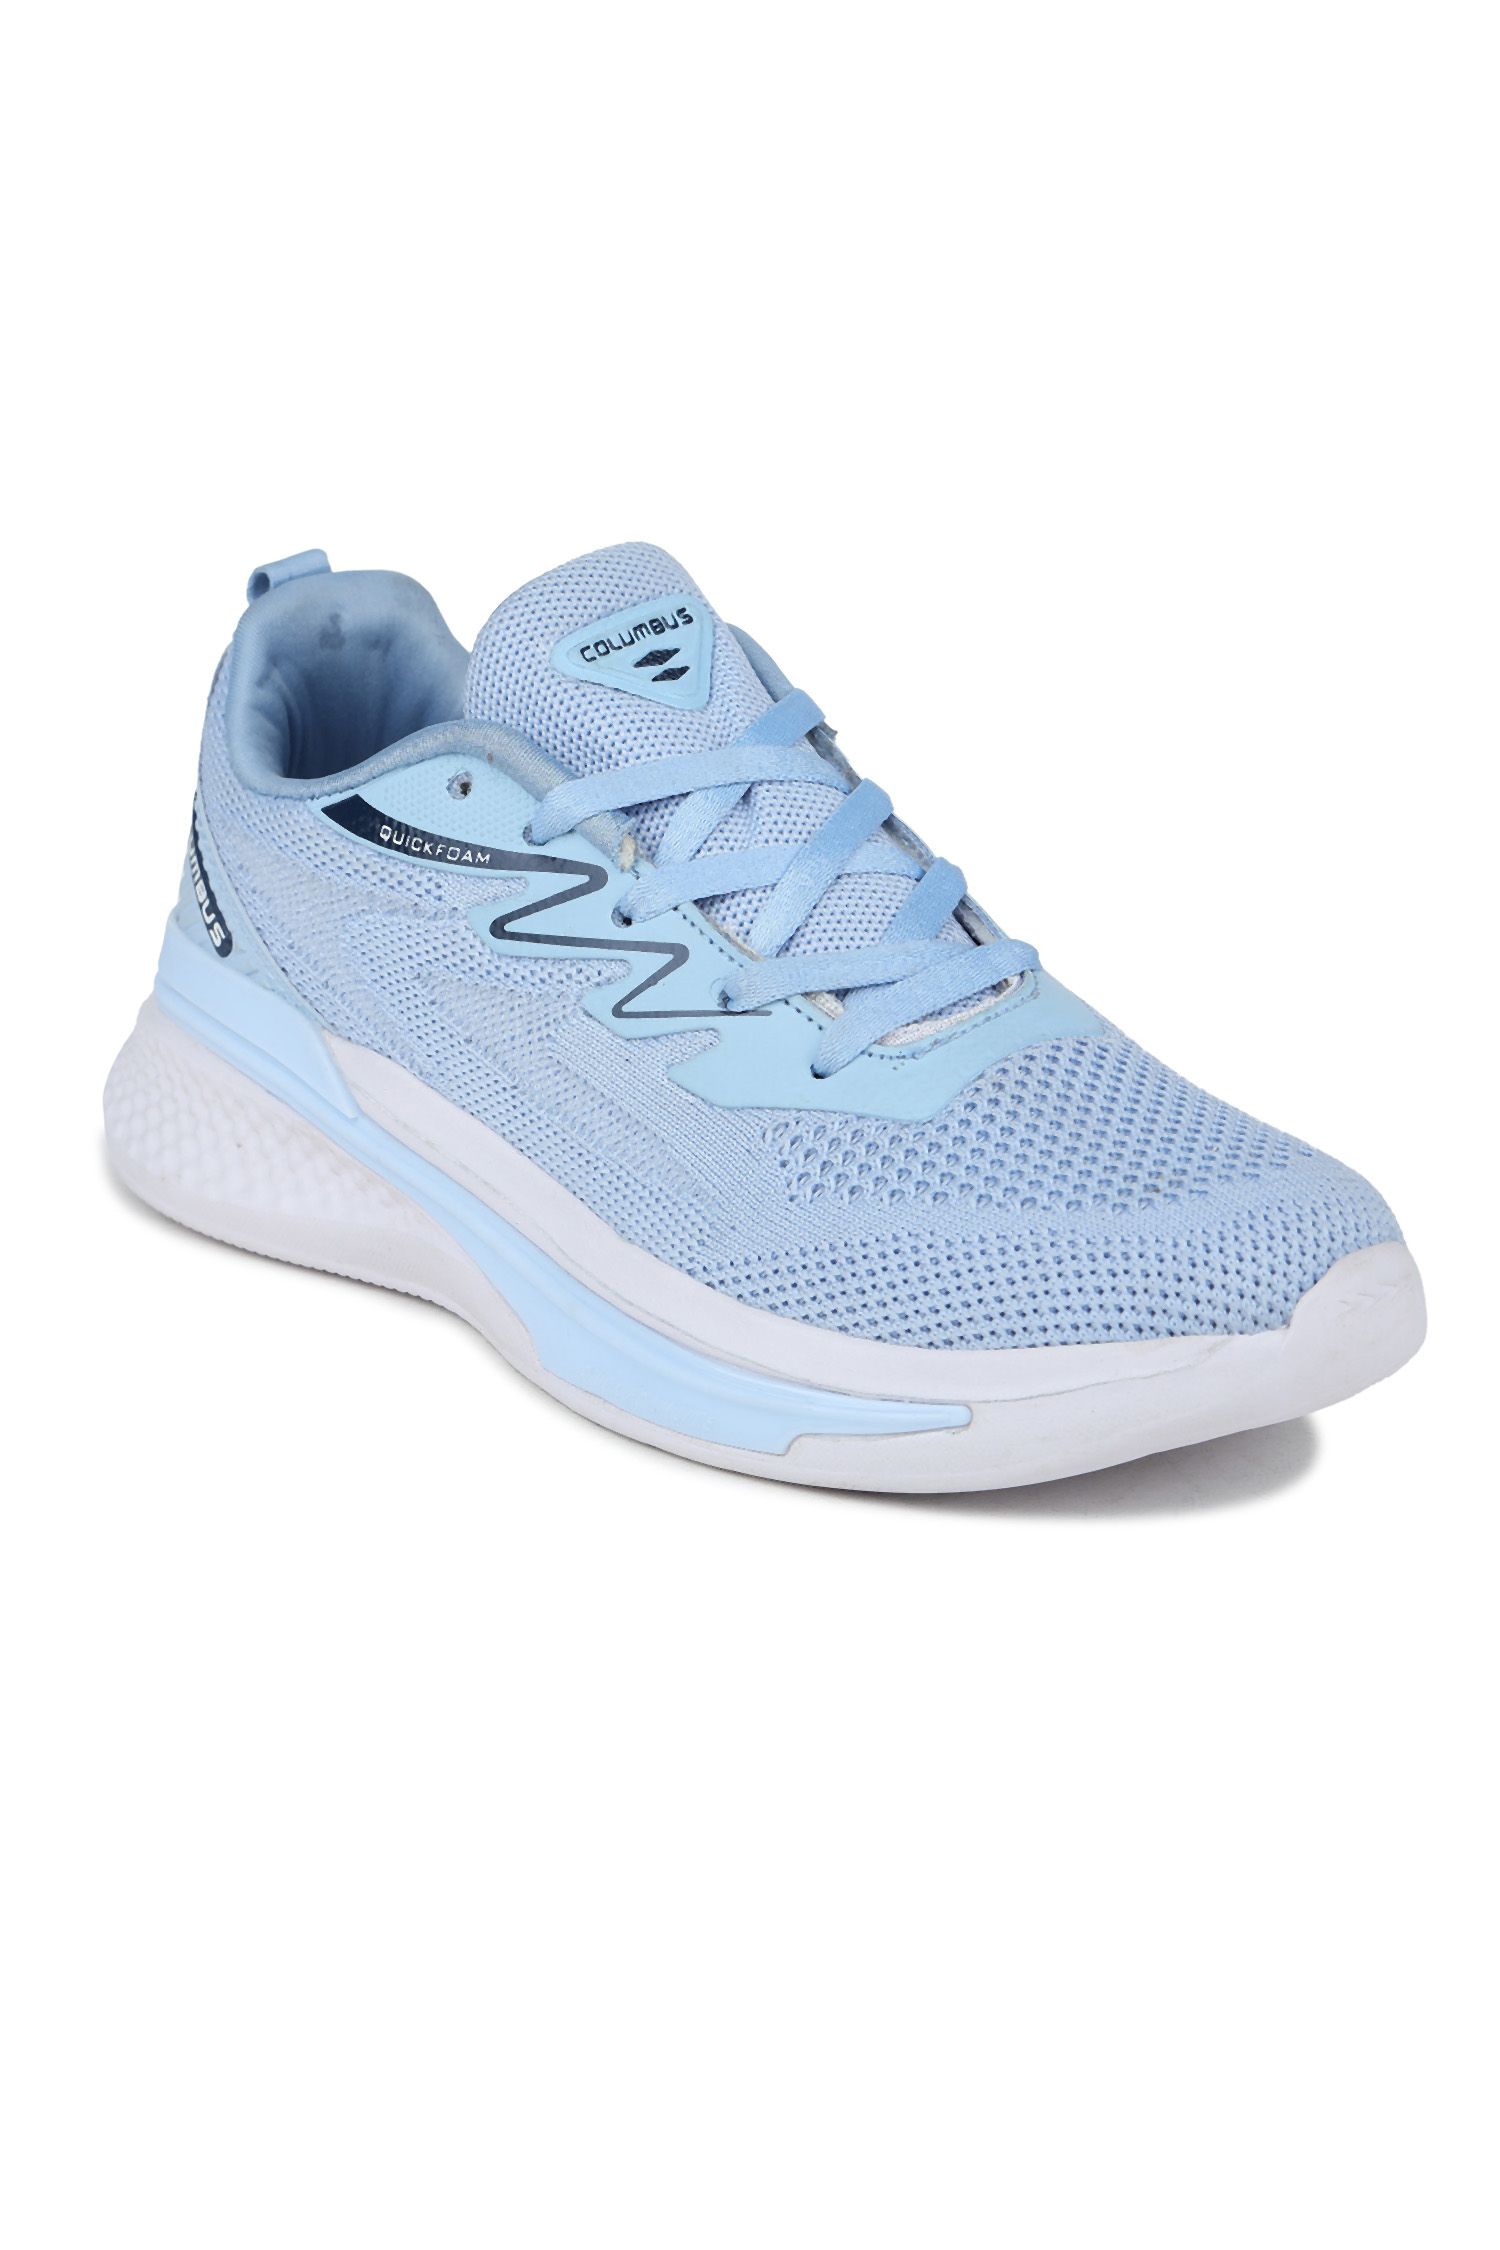     			Columbus - Blue Women's Running Shoes